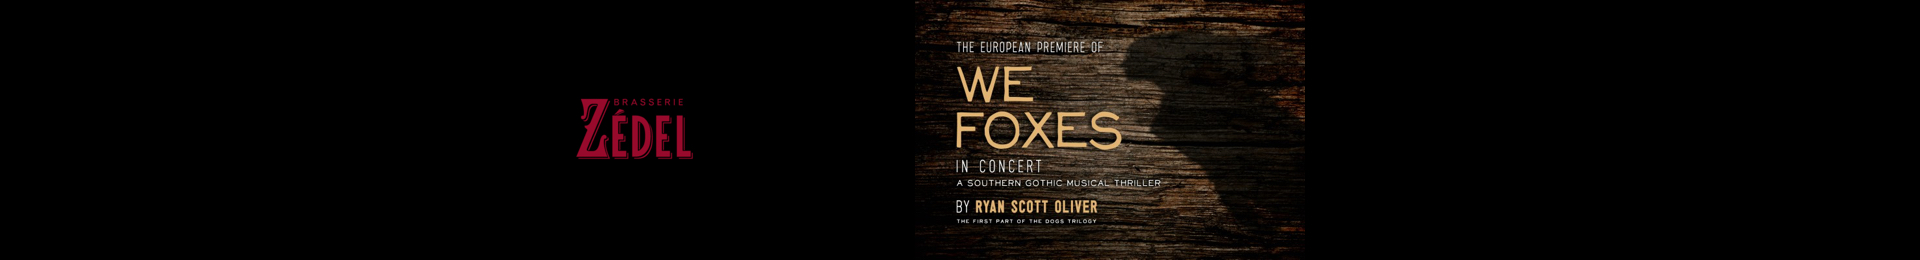 Ryan Scott Oliver’s We Foxes: In Concert banner image